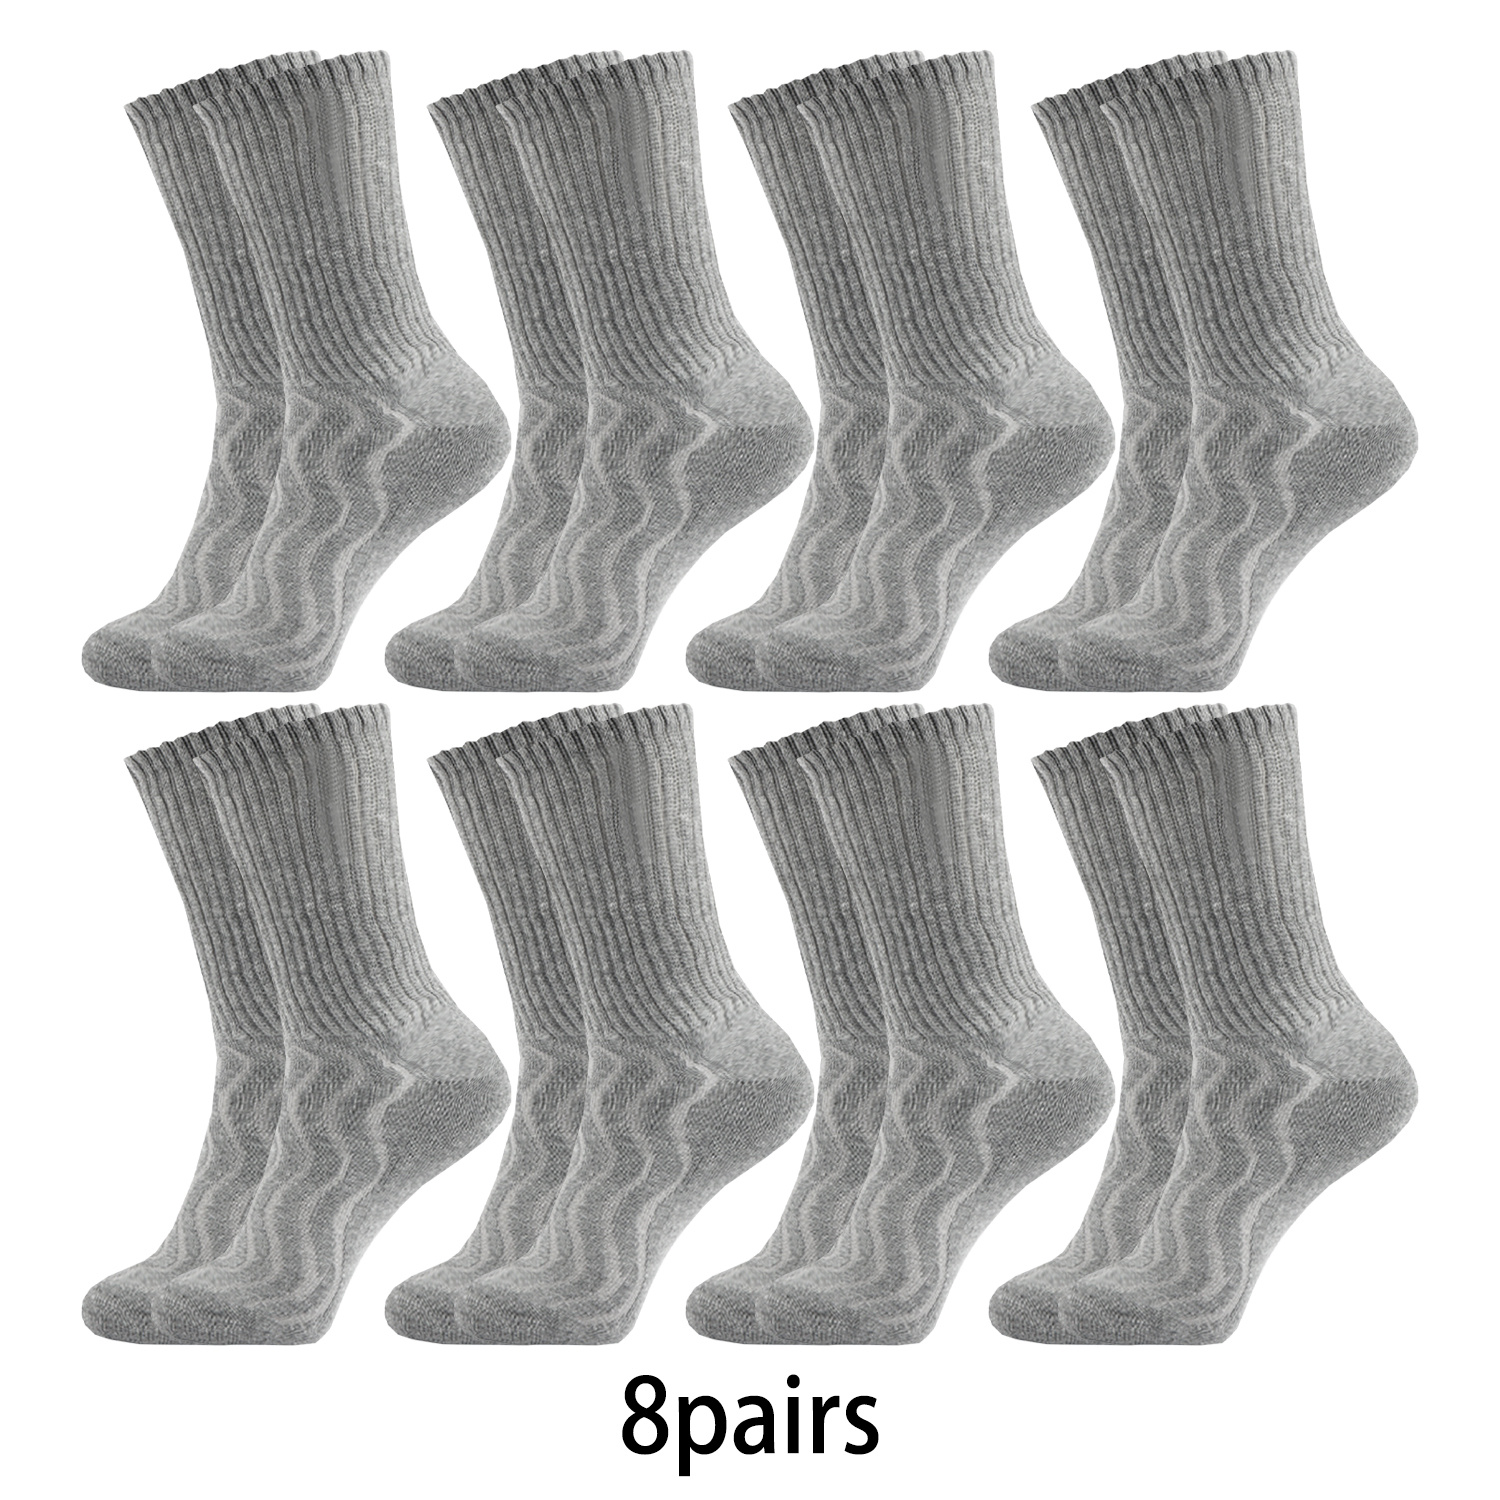 

8 Pairs Cotton Diabetic Crew Seamless Socks For Men & Women - Breathable, Non-binding Top, Cushion Sole, Moisture Management